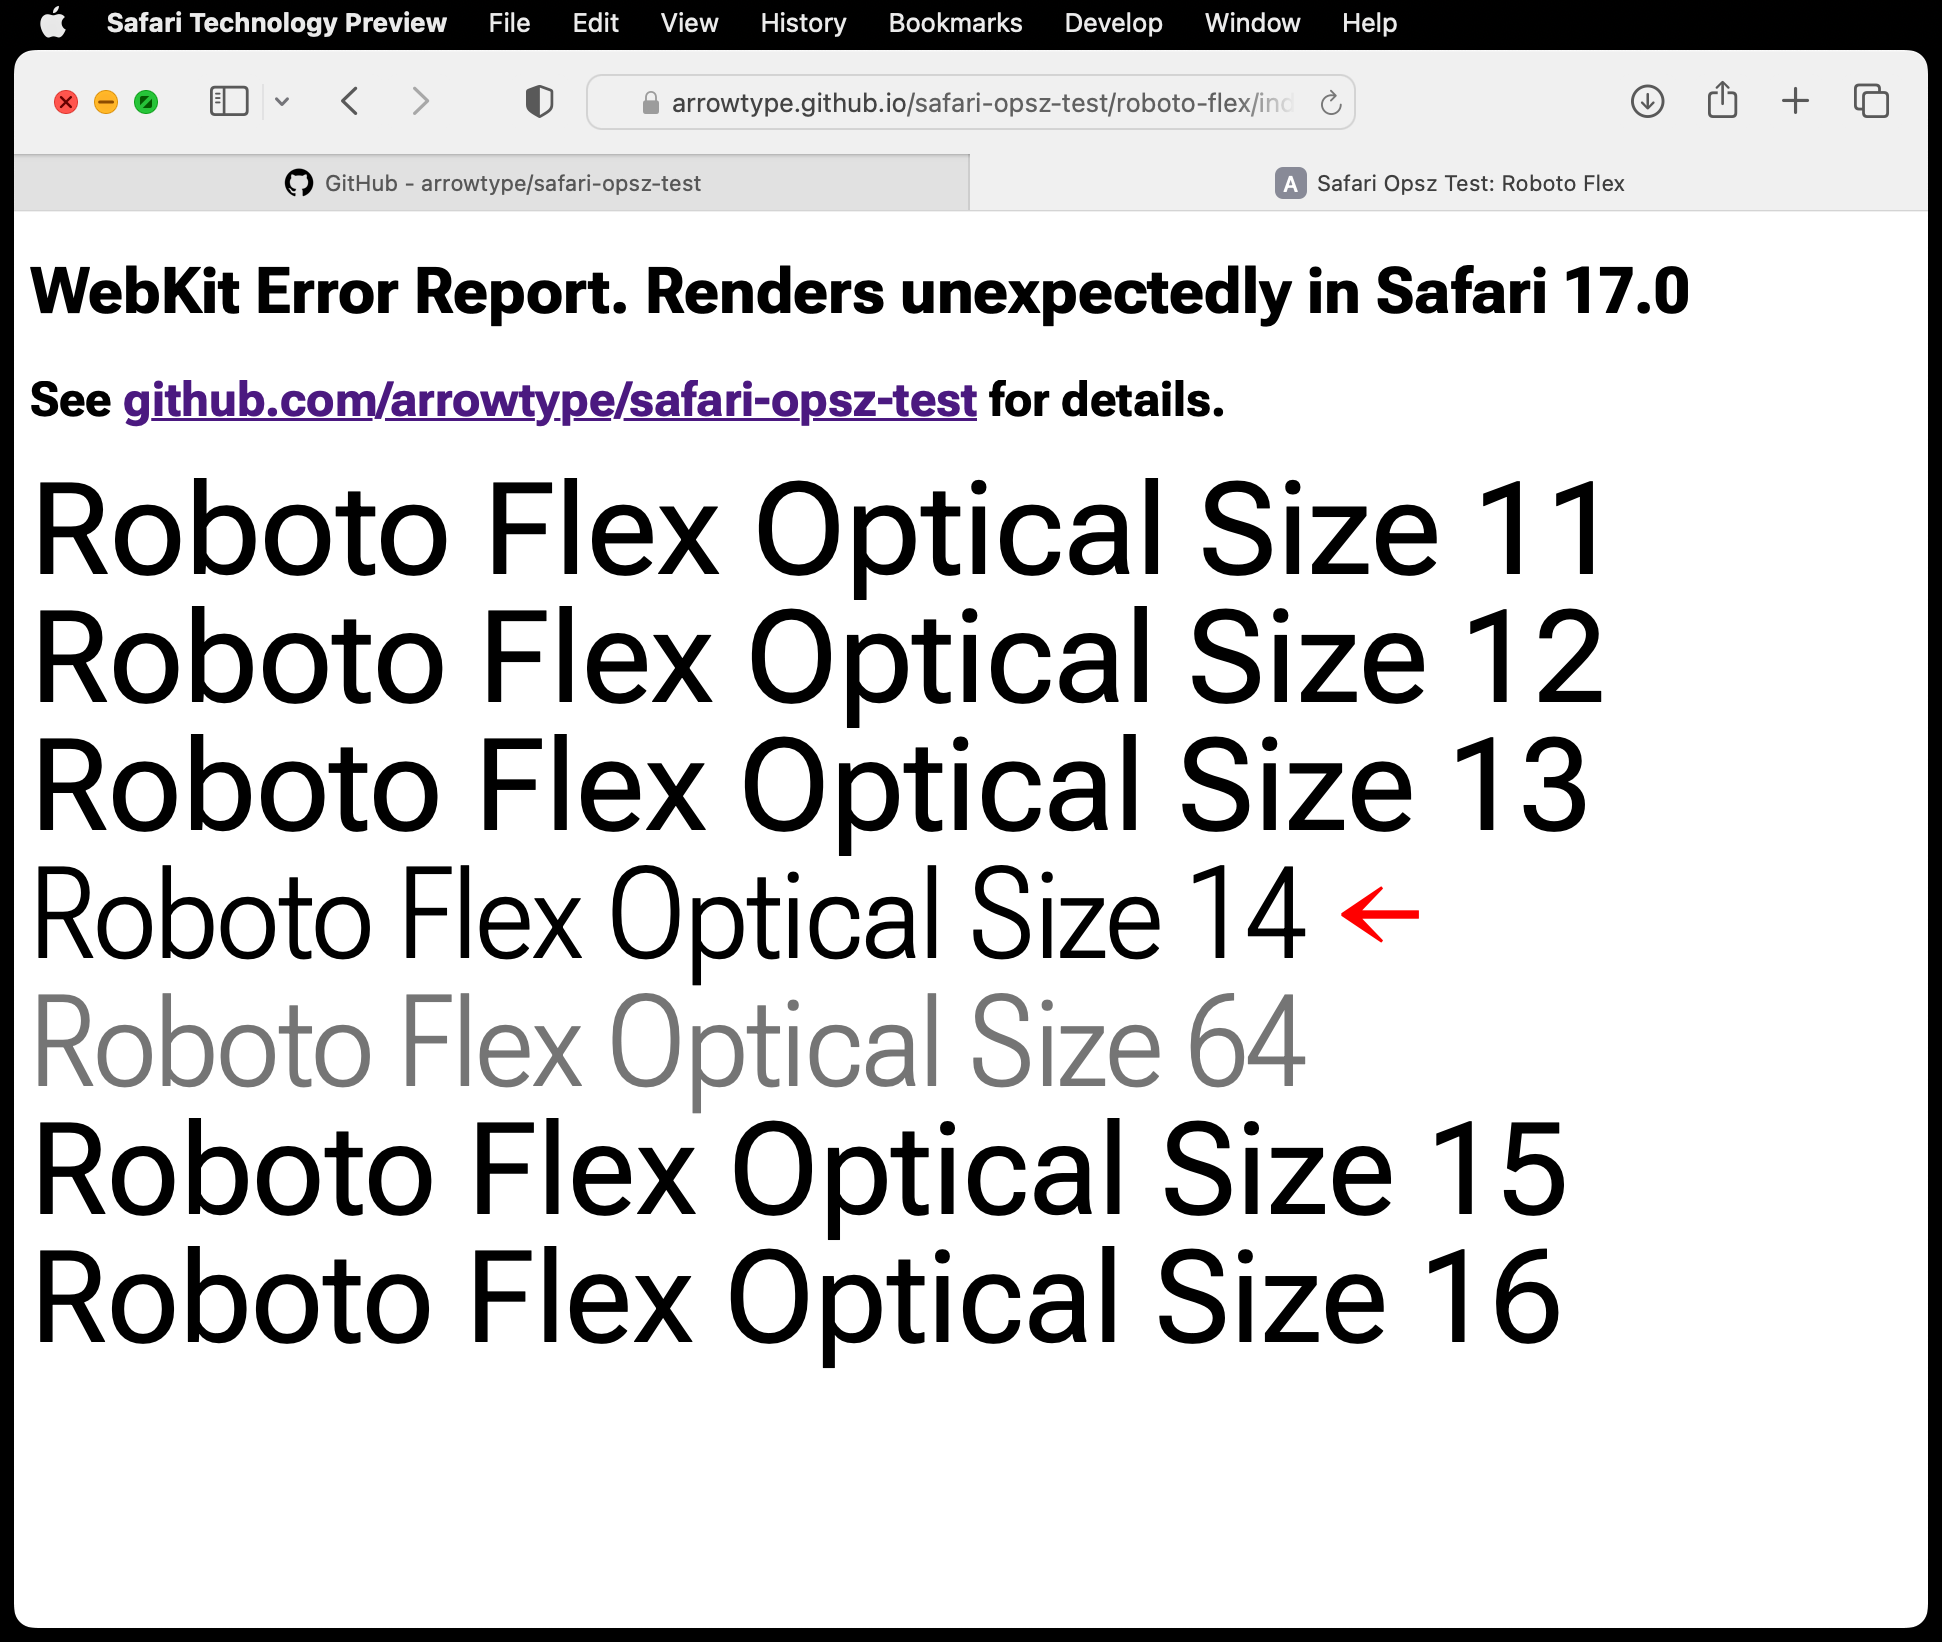 Safari Optical Size issue, Roboto Flex